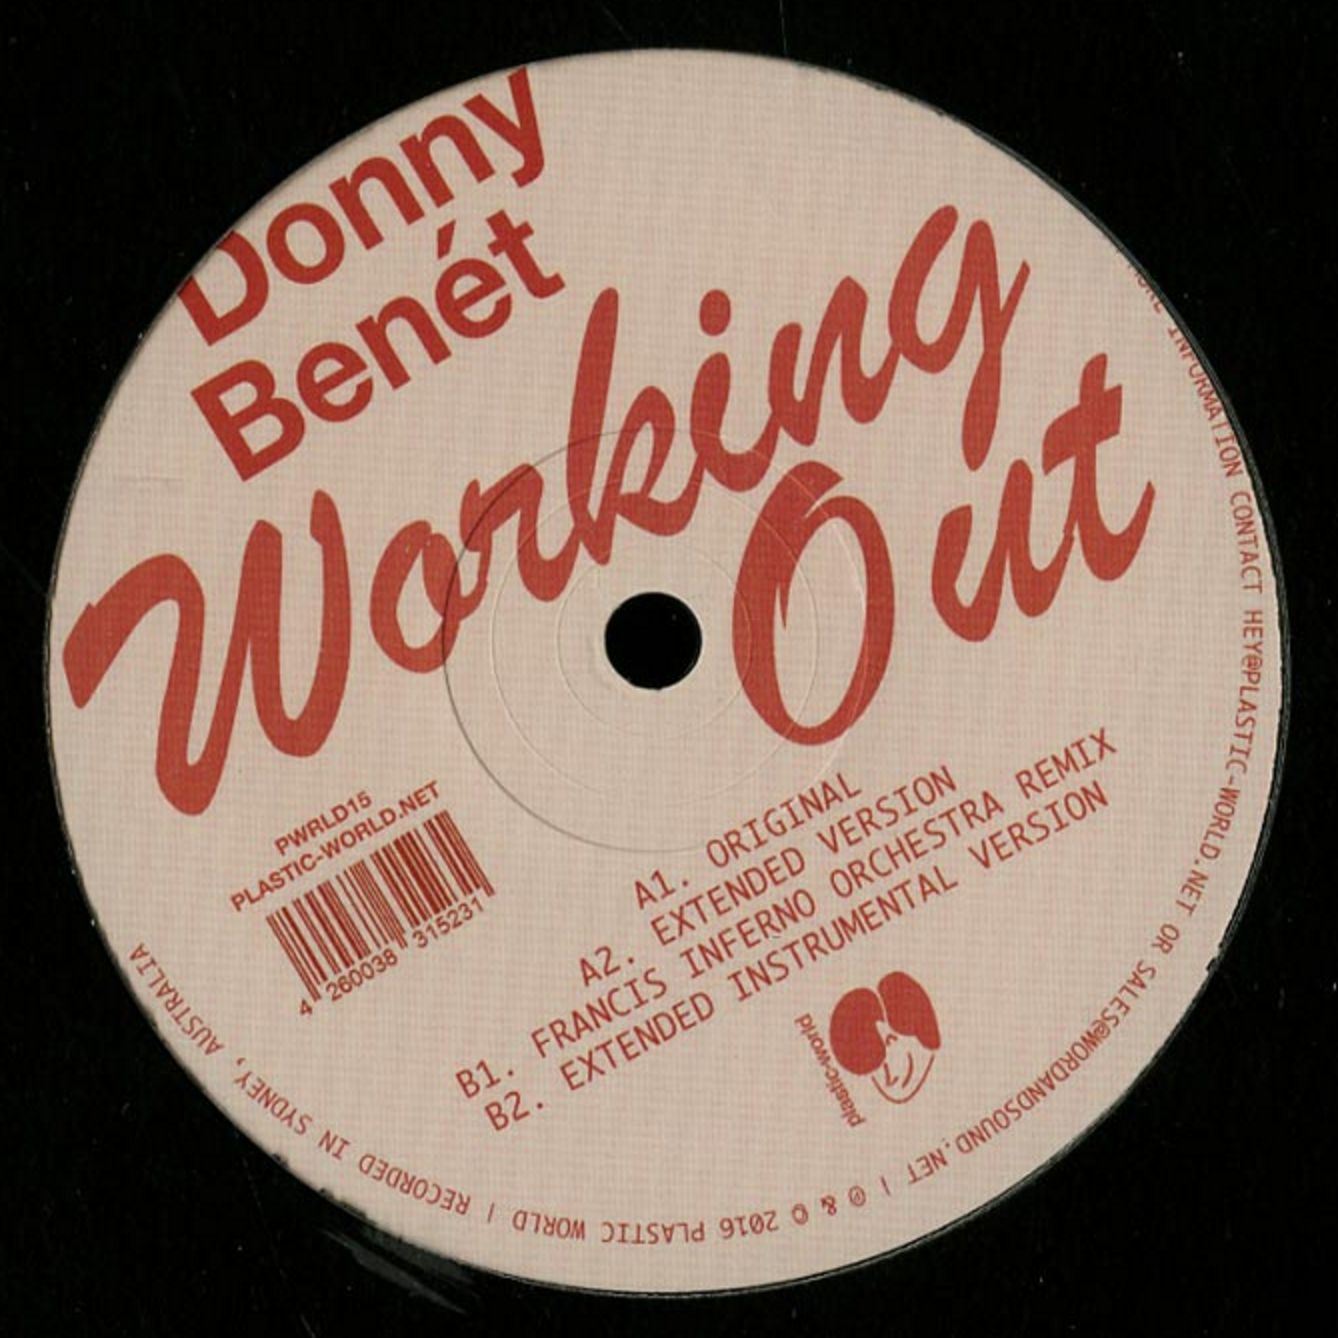 ڈاؤن لوڈ کریں Donny Benet - Working Out (FIO's Yarra Bend Reprise)